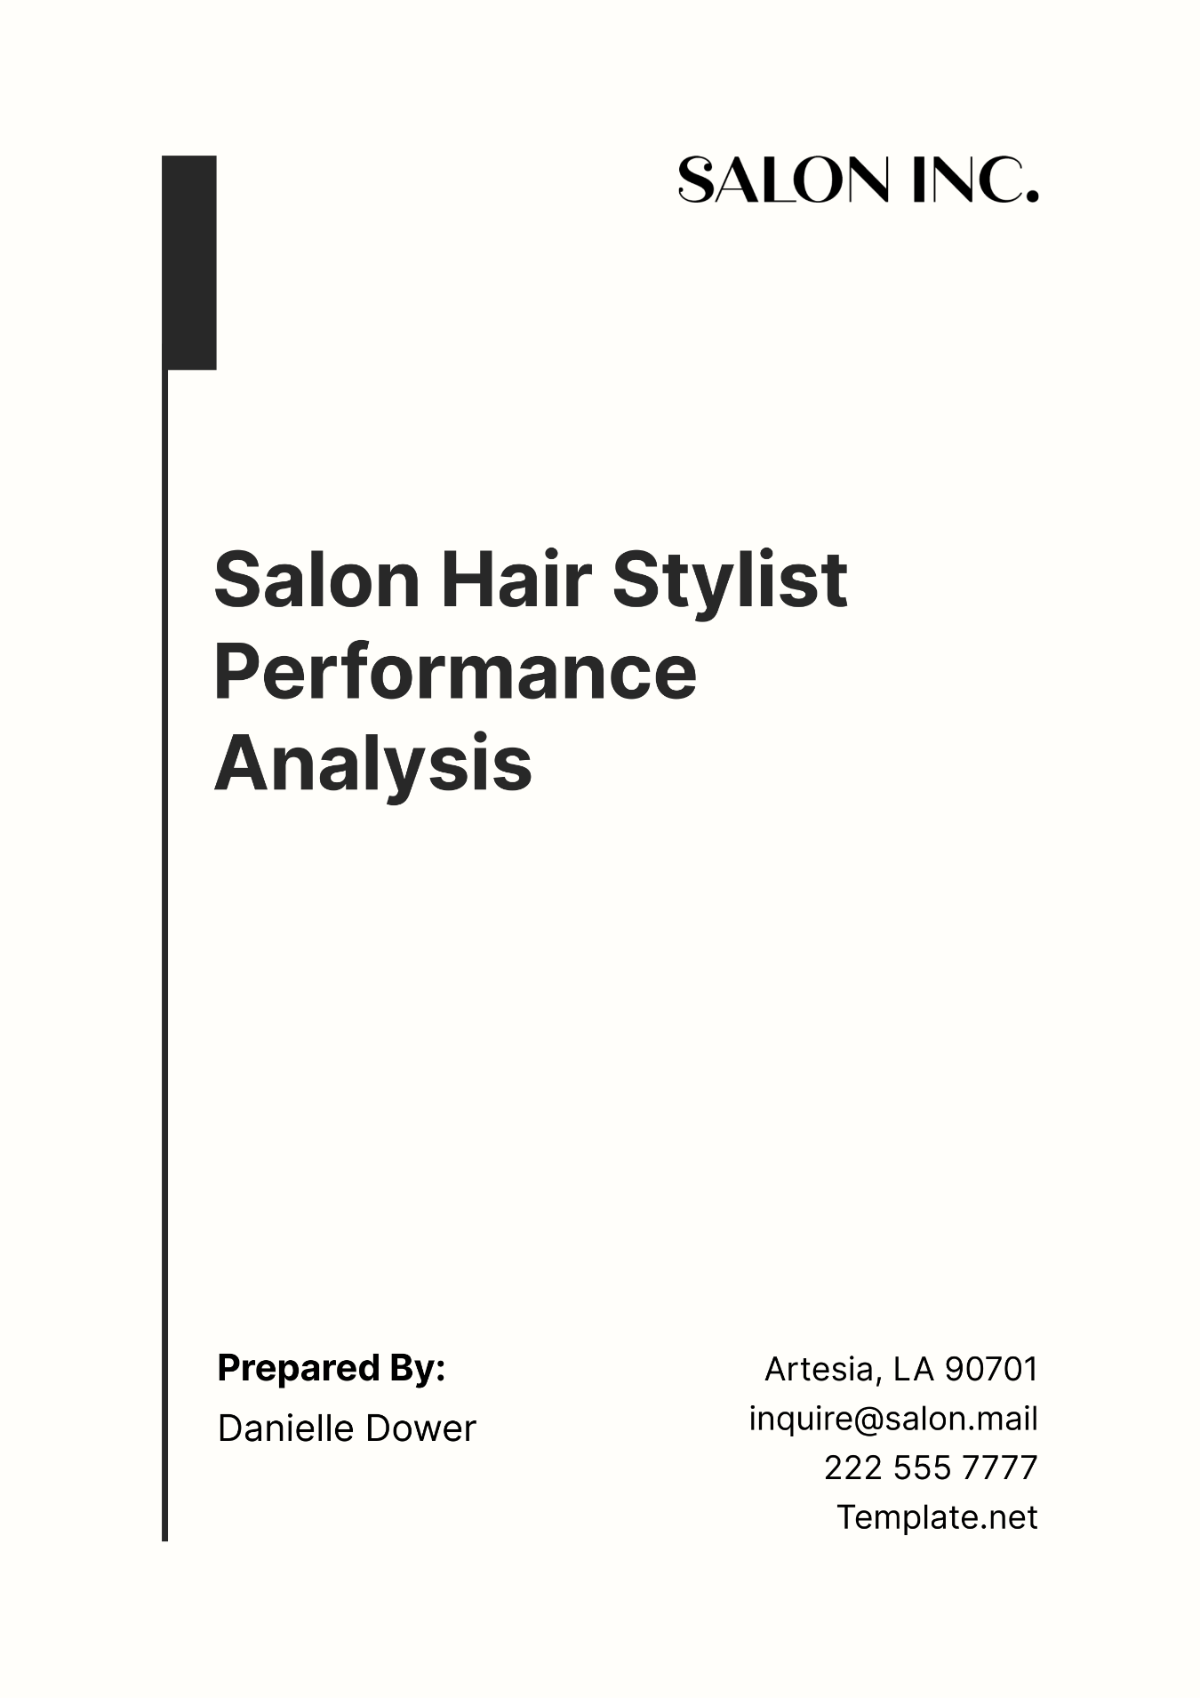 Salon Hair Stylist Performance Analysis Template